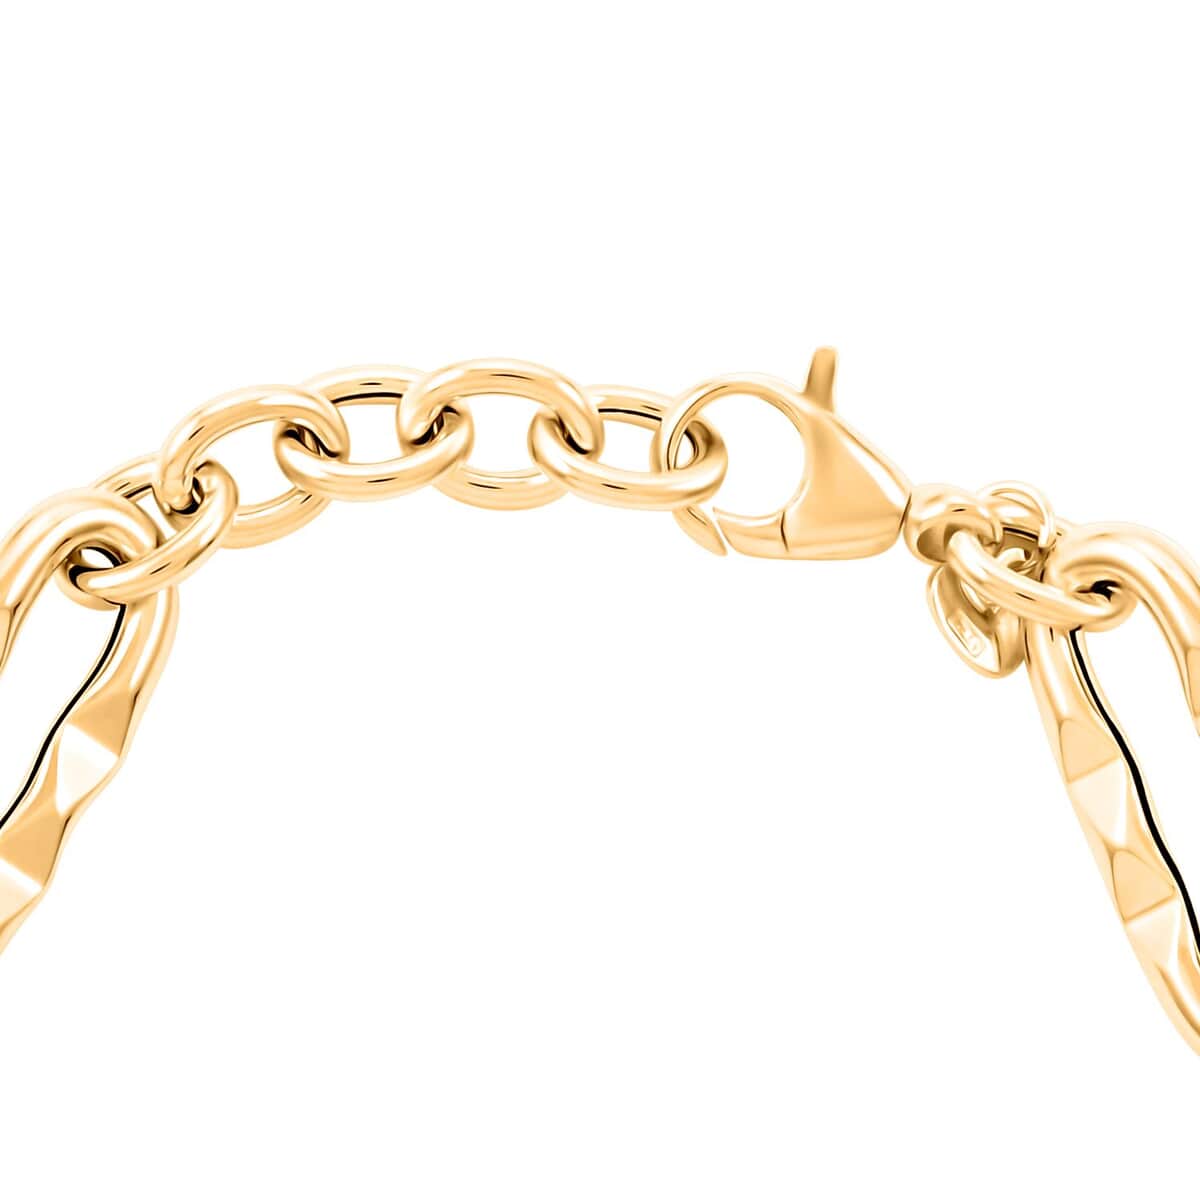 Onda d'oro Italian 10K Yellow Gold 8.2mm Chain Bracelet (7.0-8.0In) 5.15 Grams image number 3